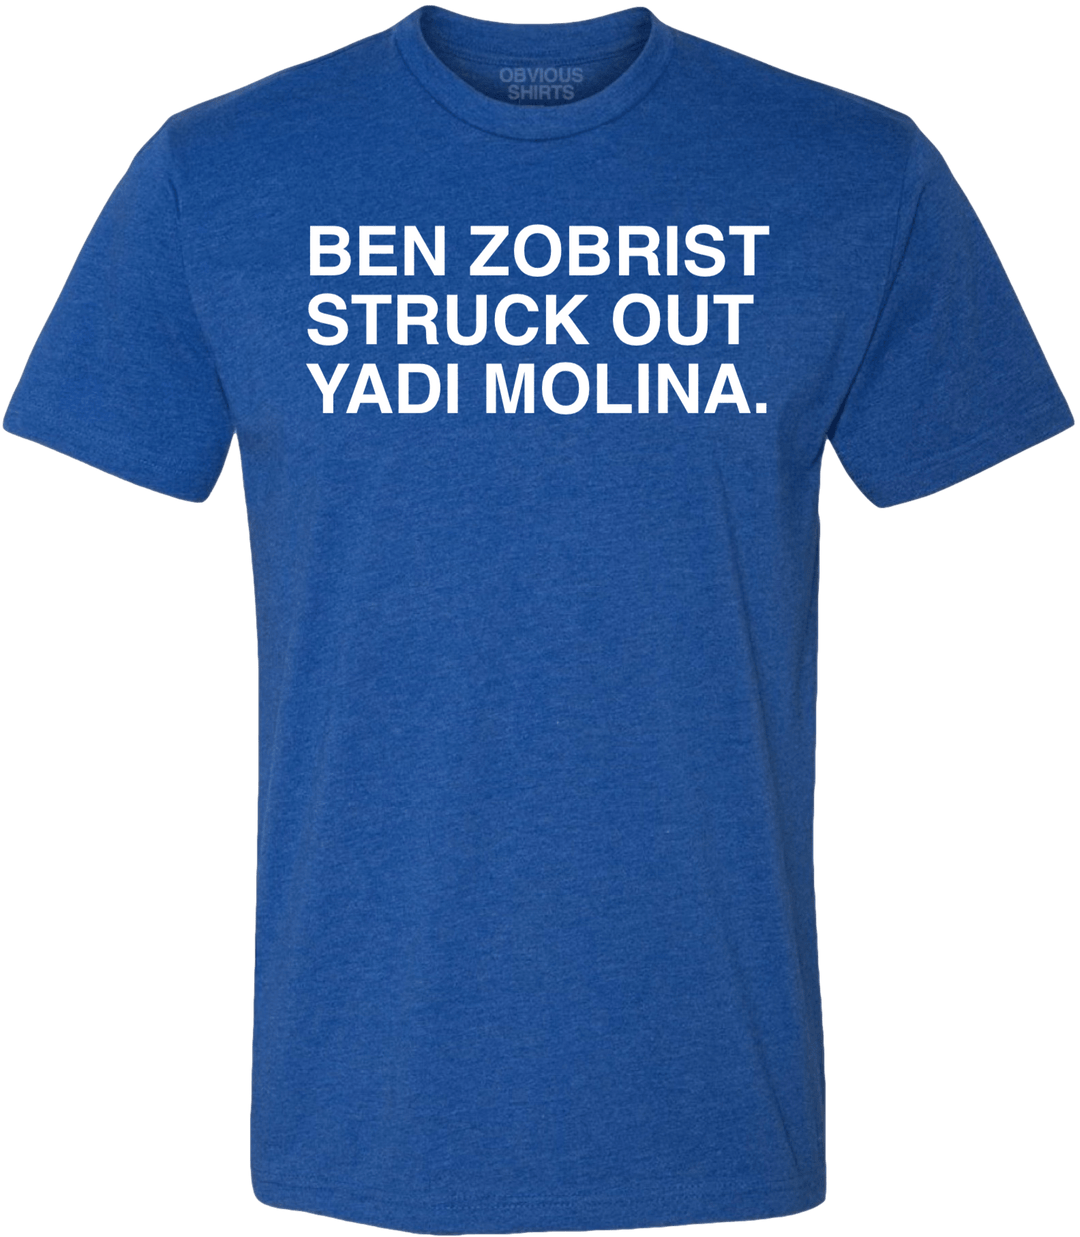 BEN ZOBRIST STRUCK OUT YADI MOLINA. - OBVIOUS SHIRTS